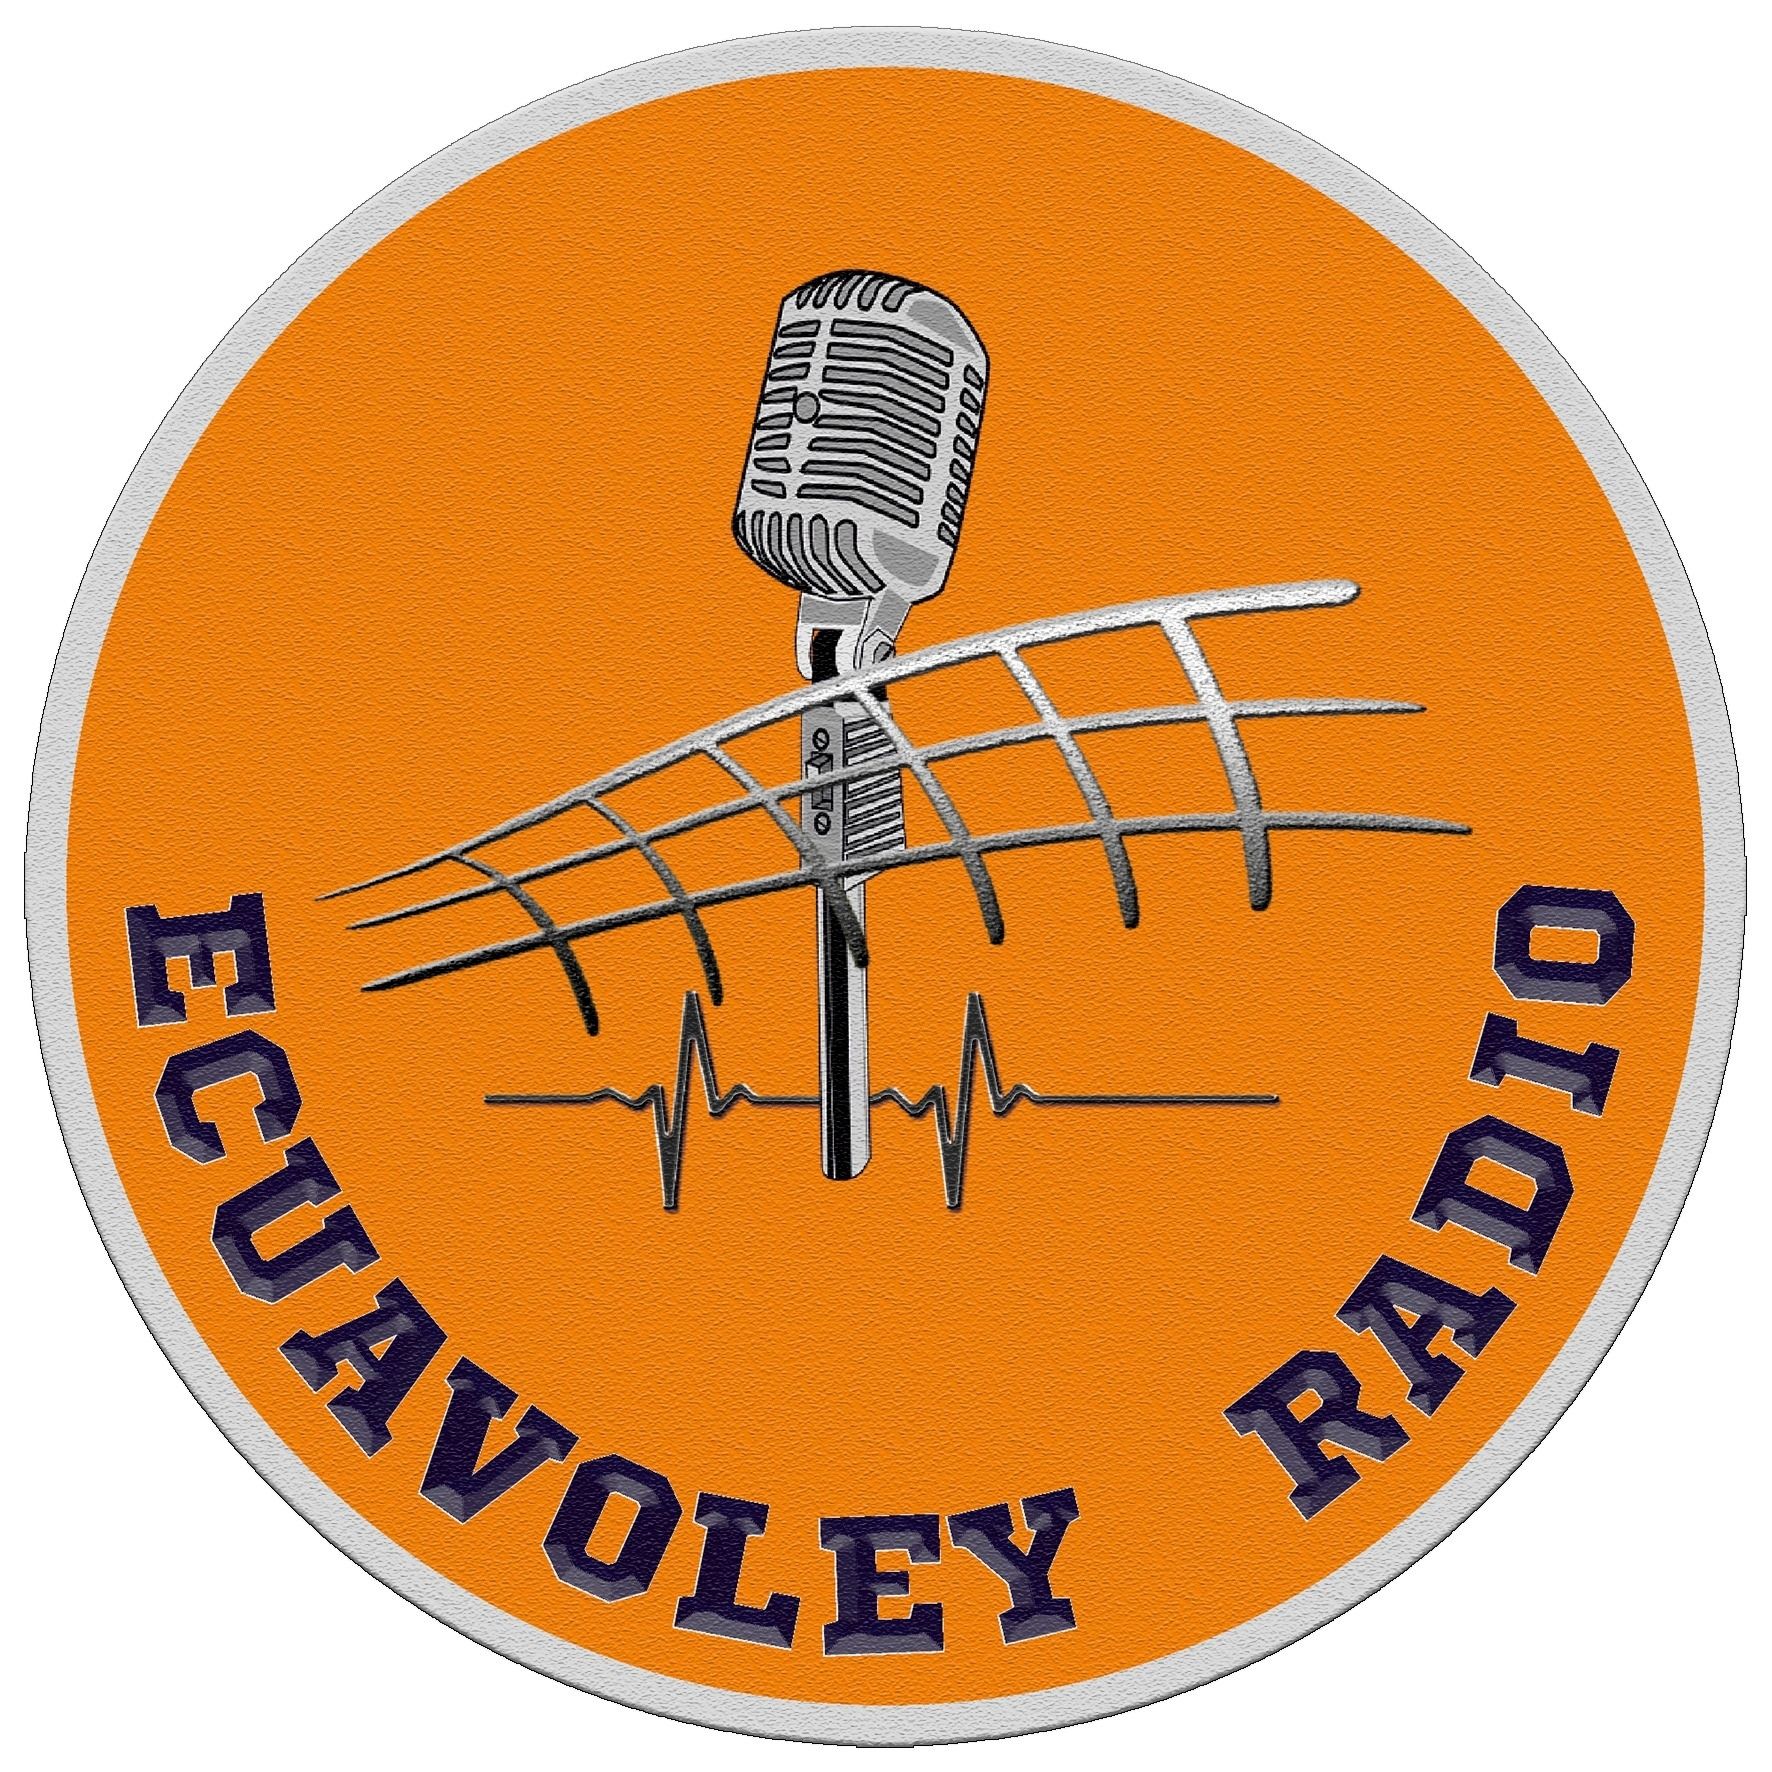 20381_Ecuavoley Radio.jpg